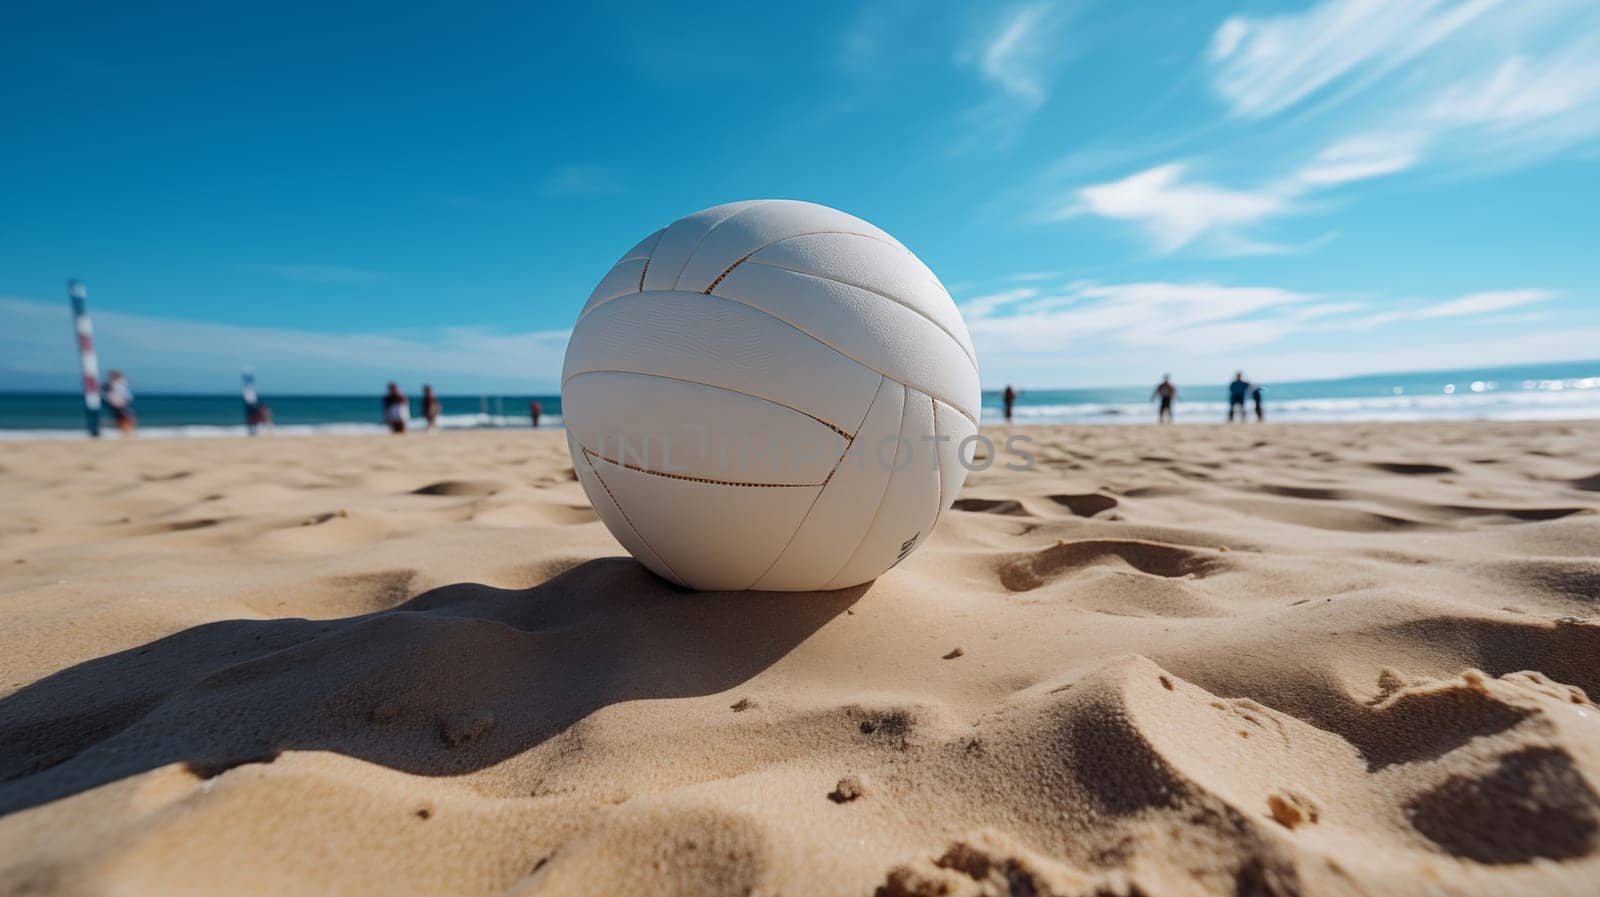 A white volleyball lies on a sandy beach by Zakharova